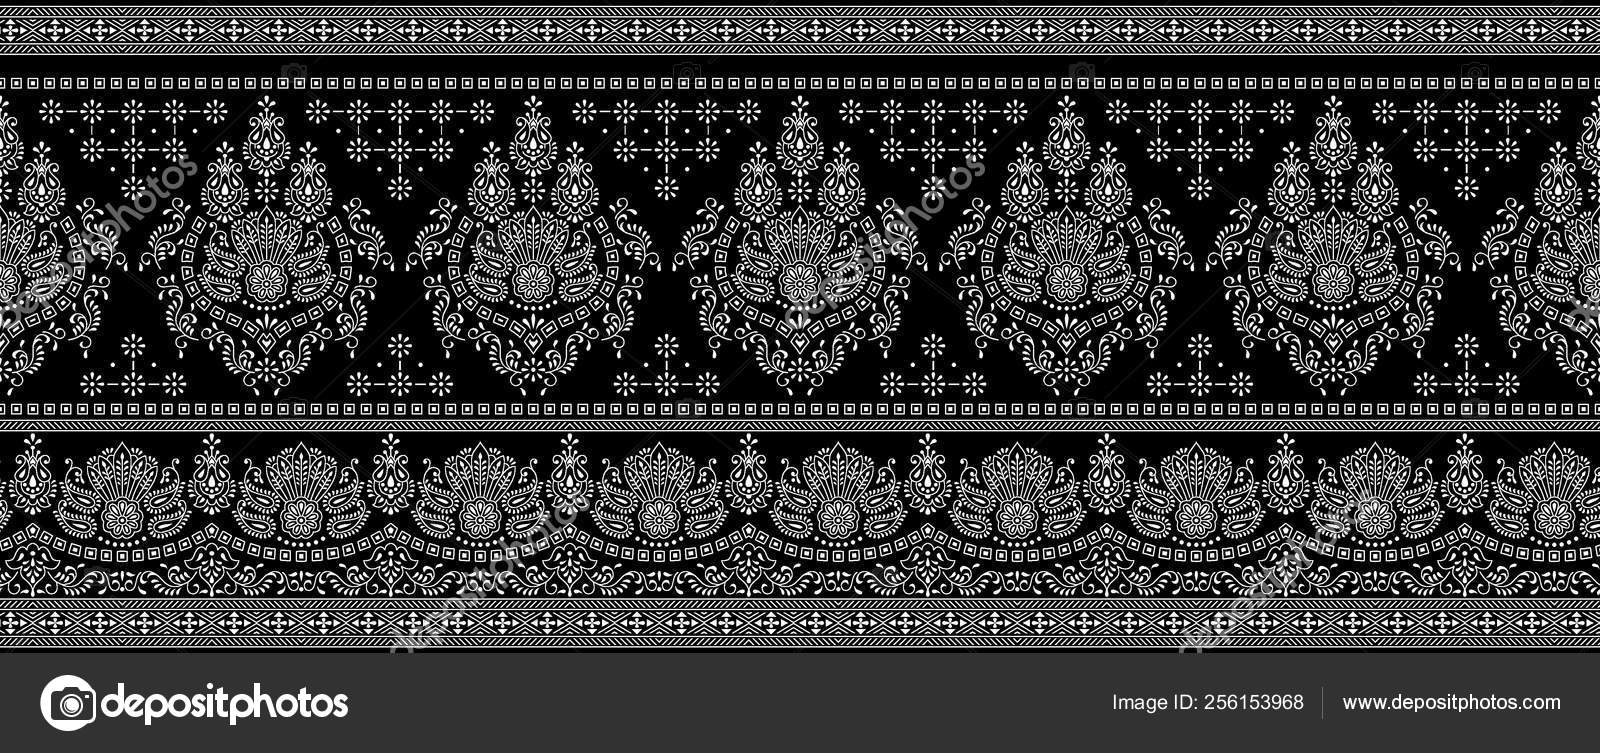 Seamless Traditional Indian Black White Textile Fabric Border Stock ...